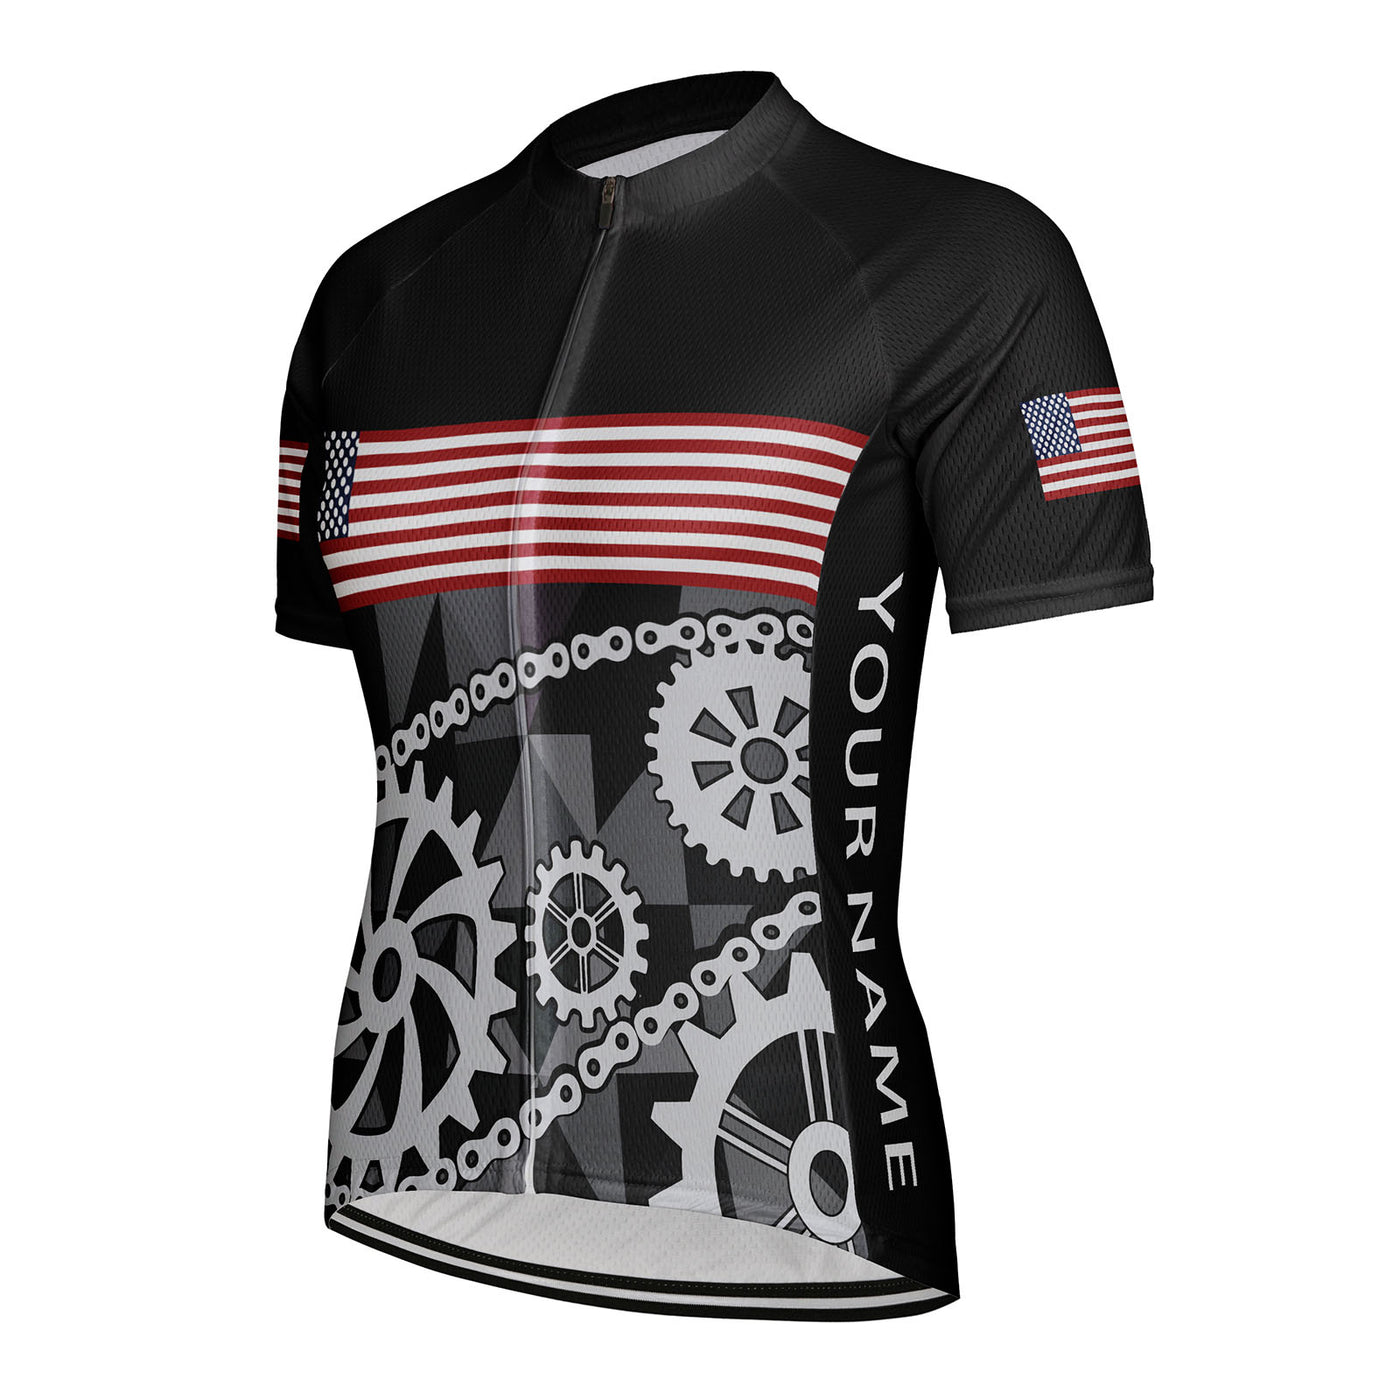 Customized USA America Women's Cycling Jersey Short Sleeve